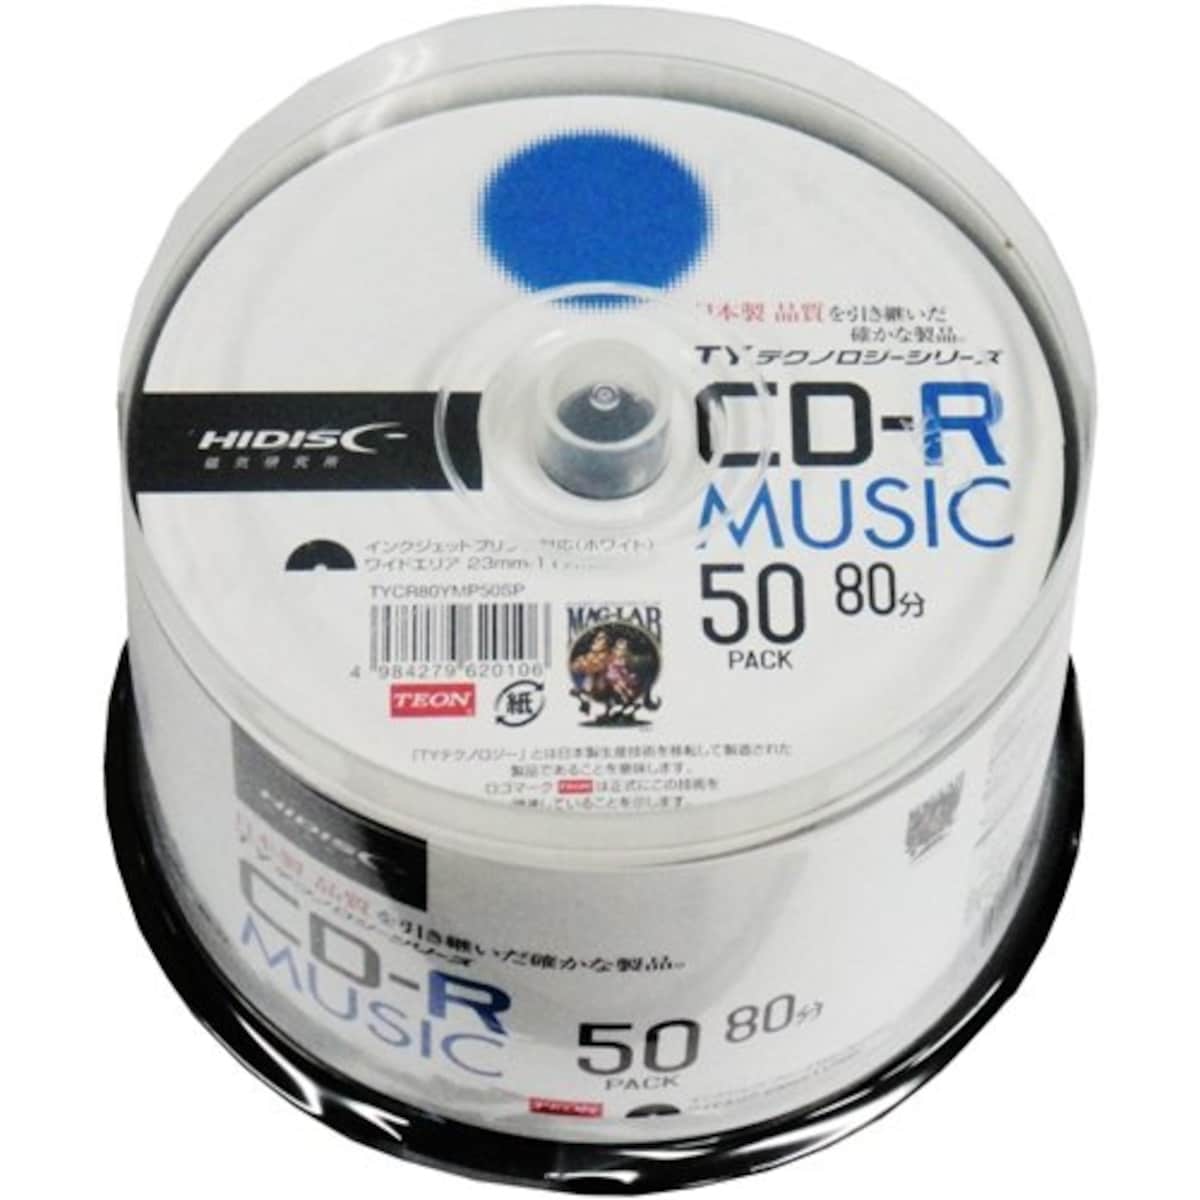 HI-DISC CD-R